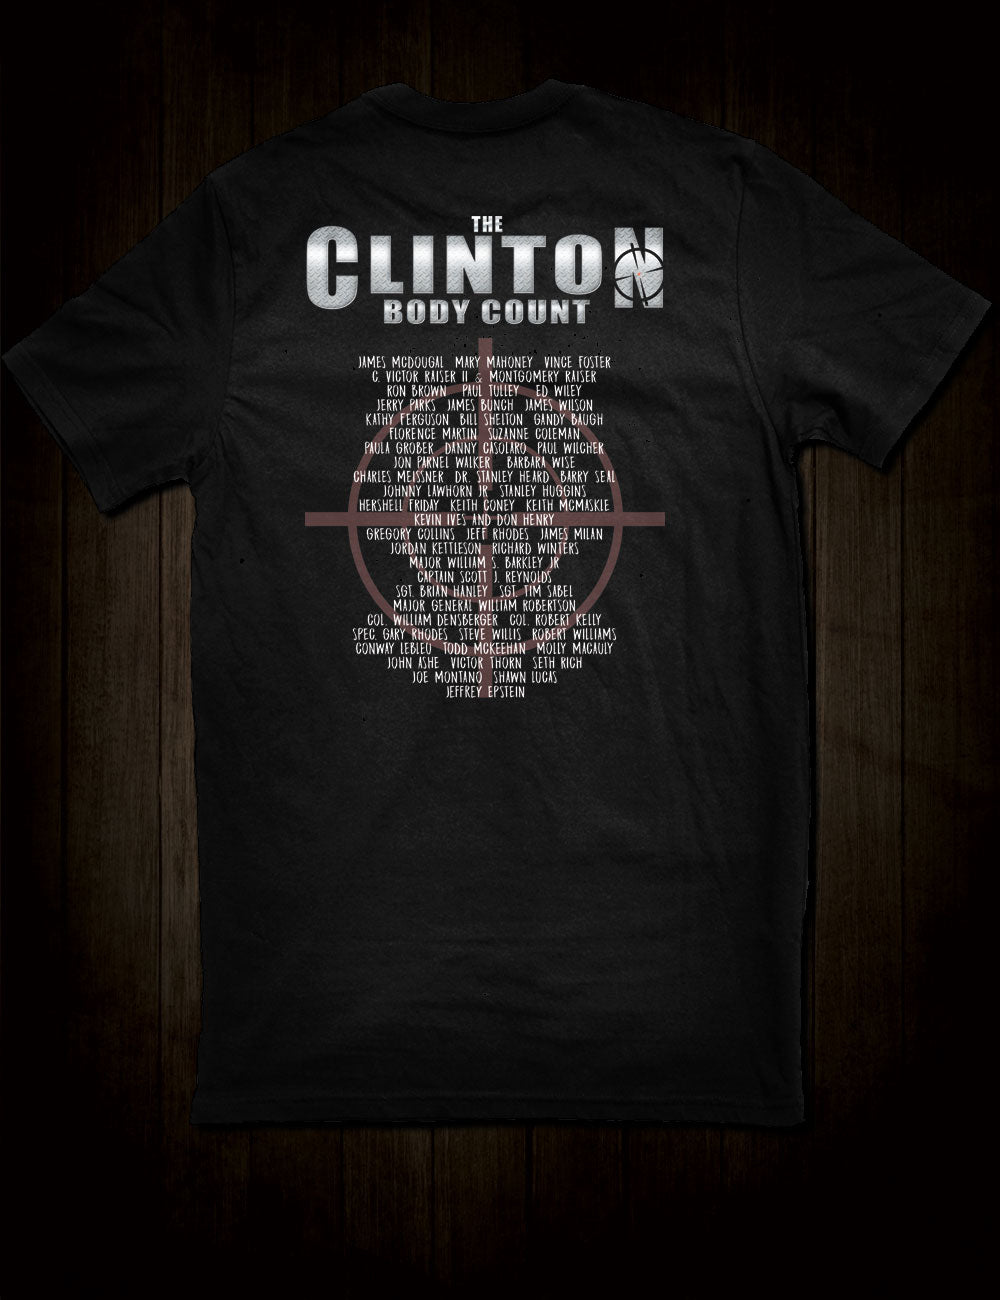 Clinton Body Count T-Shirt Names